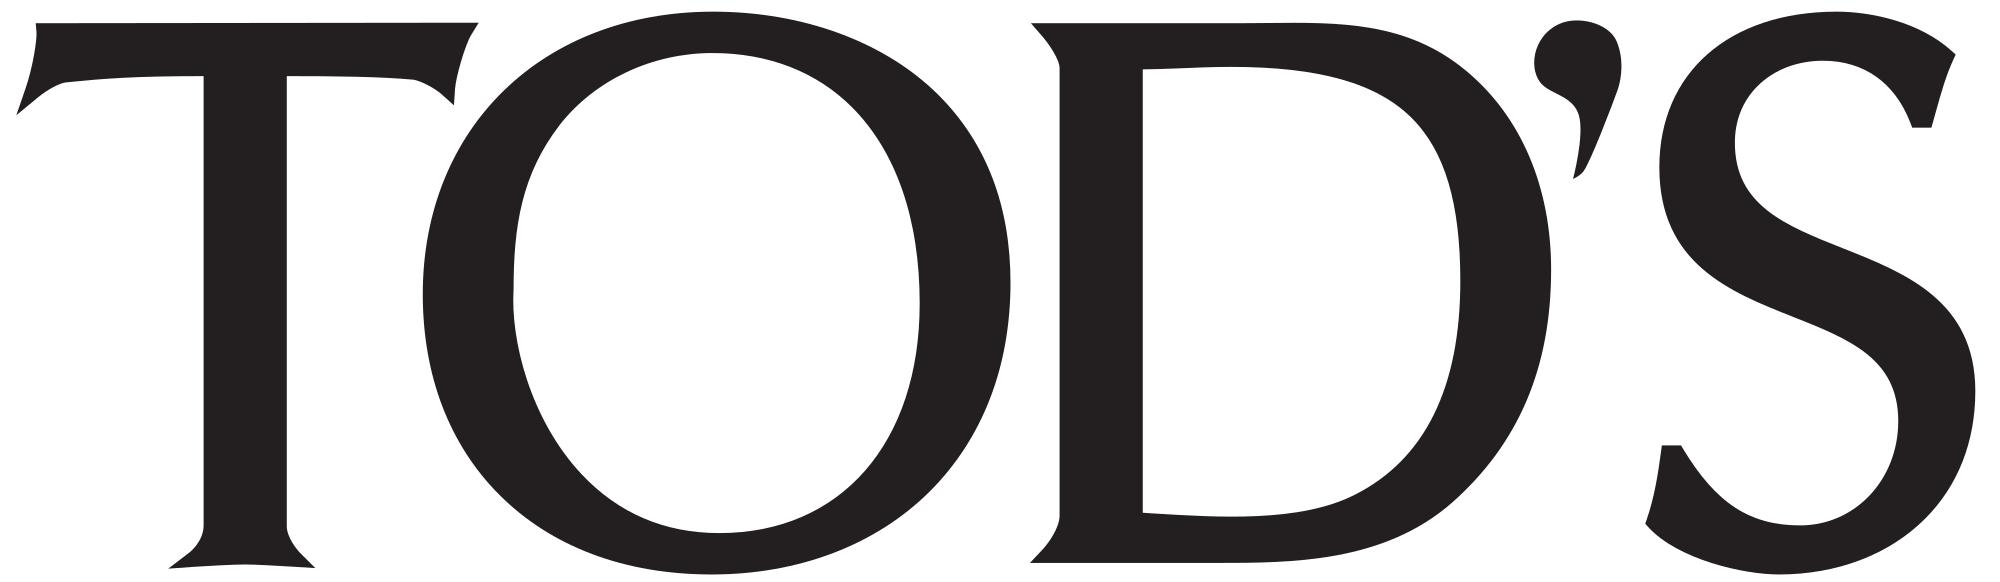 Tod's Logo - LogoDix